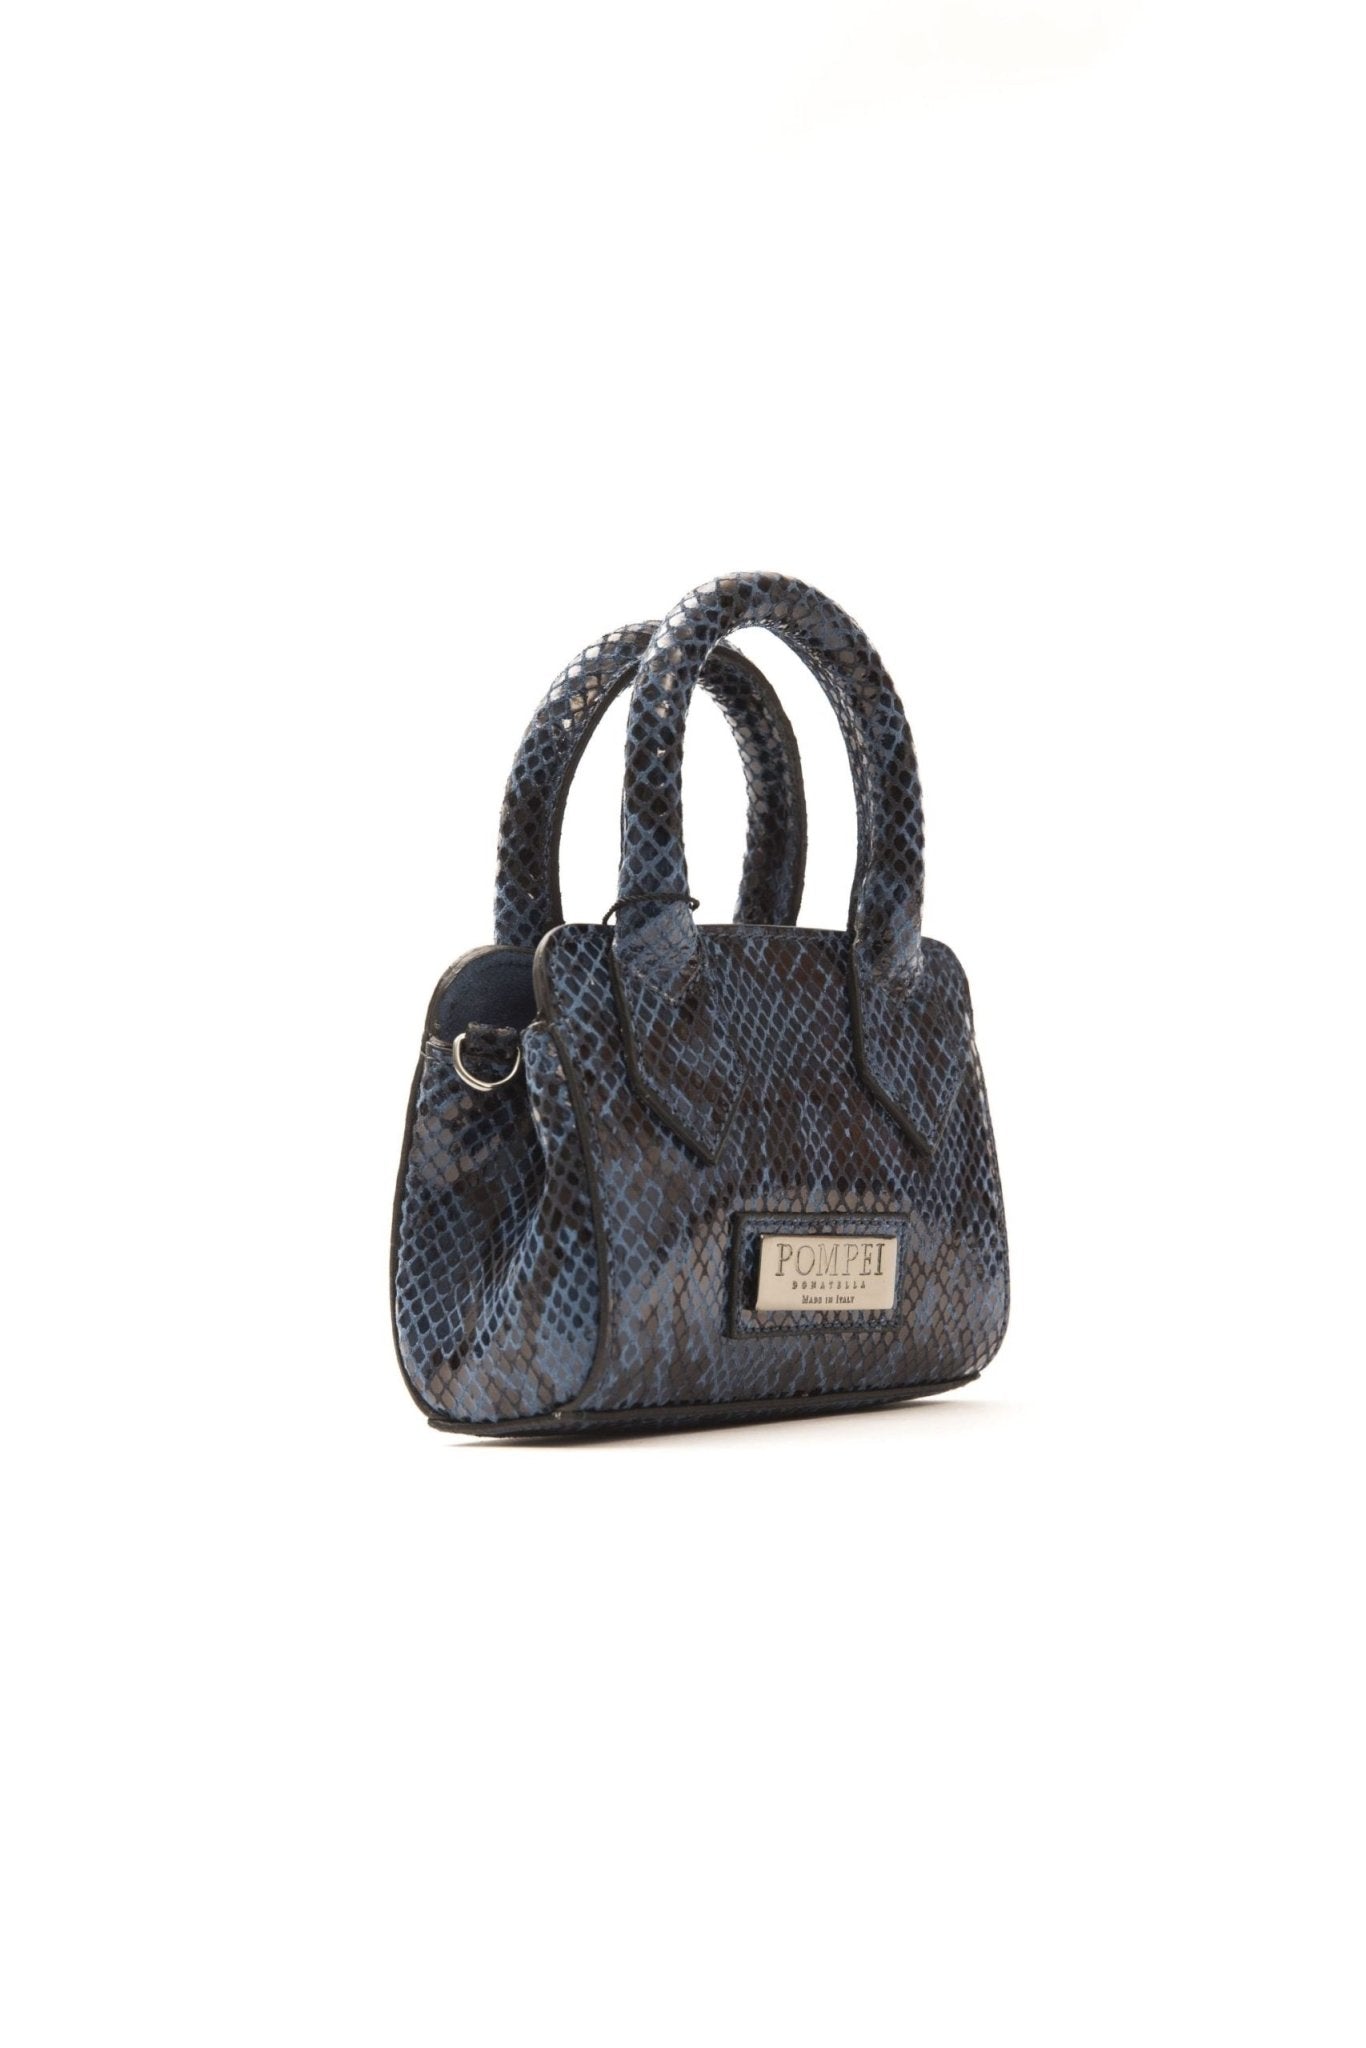 Pompei Donatella Blue Leather Handbag - Fizigo